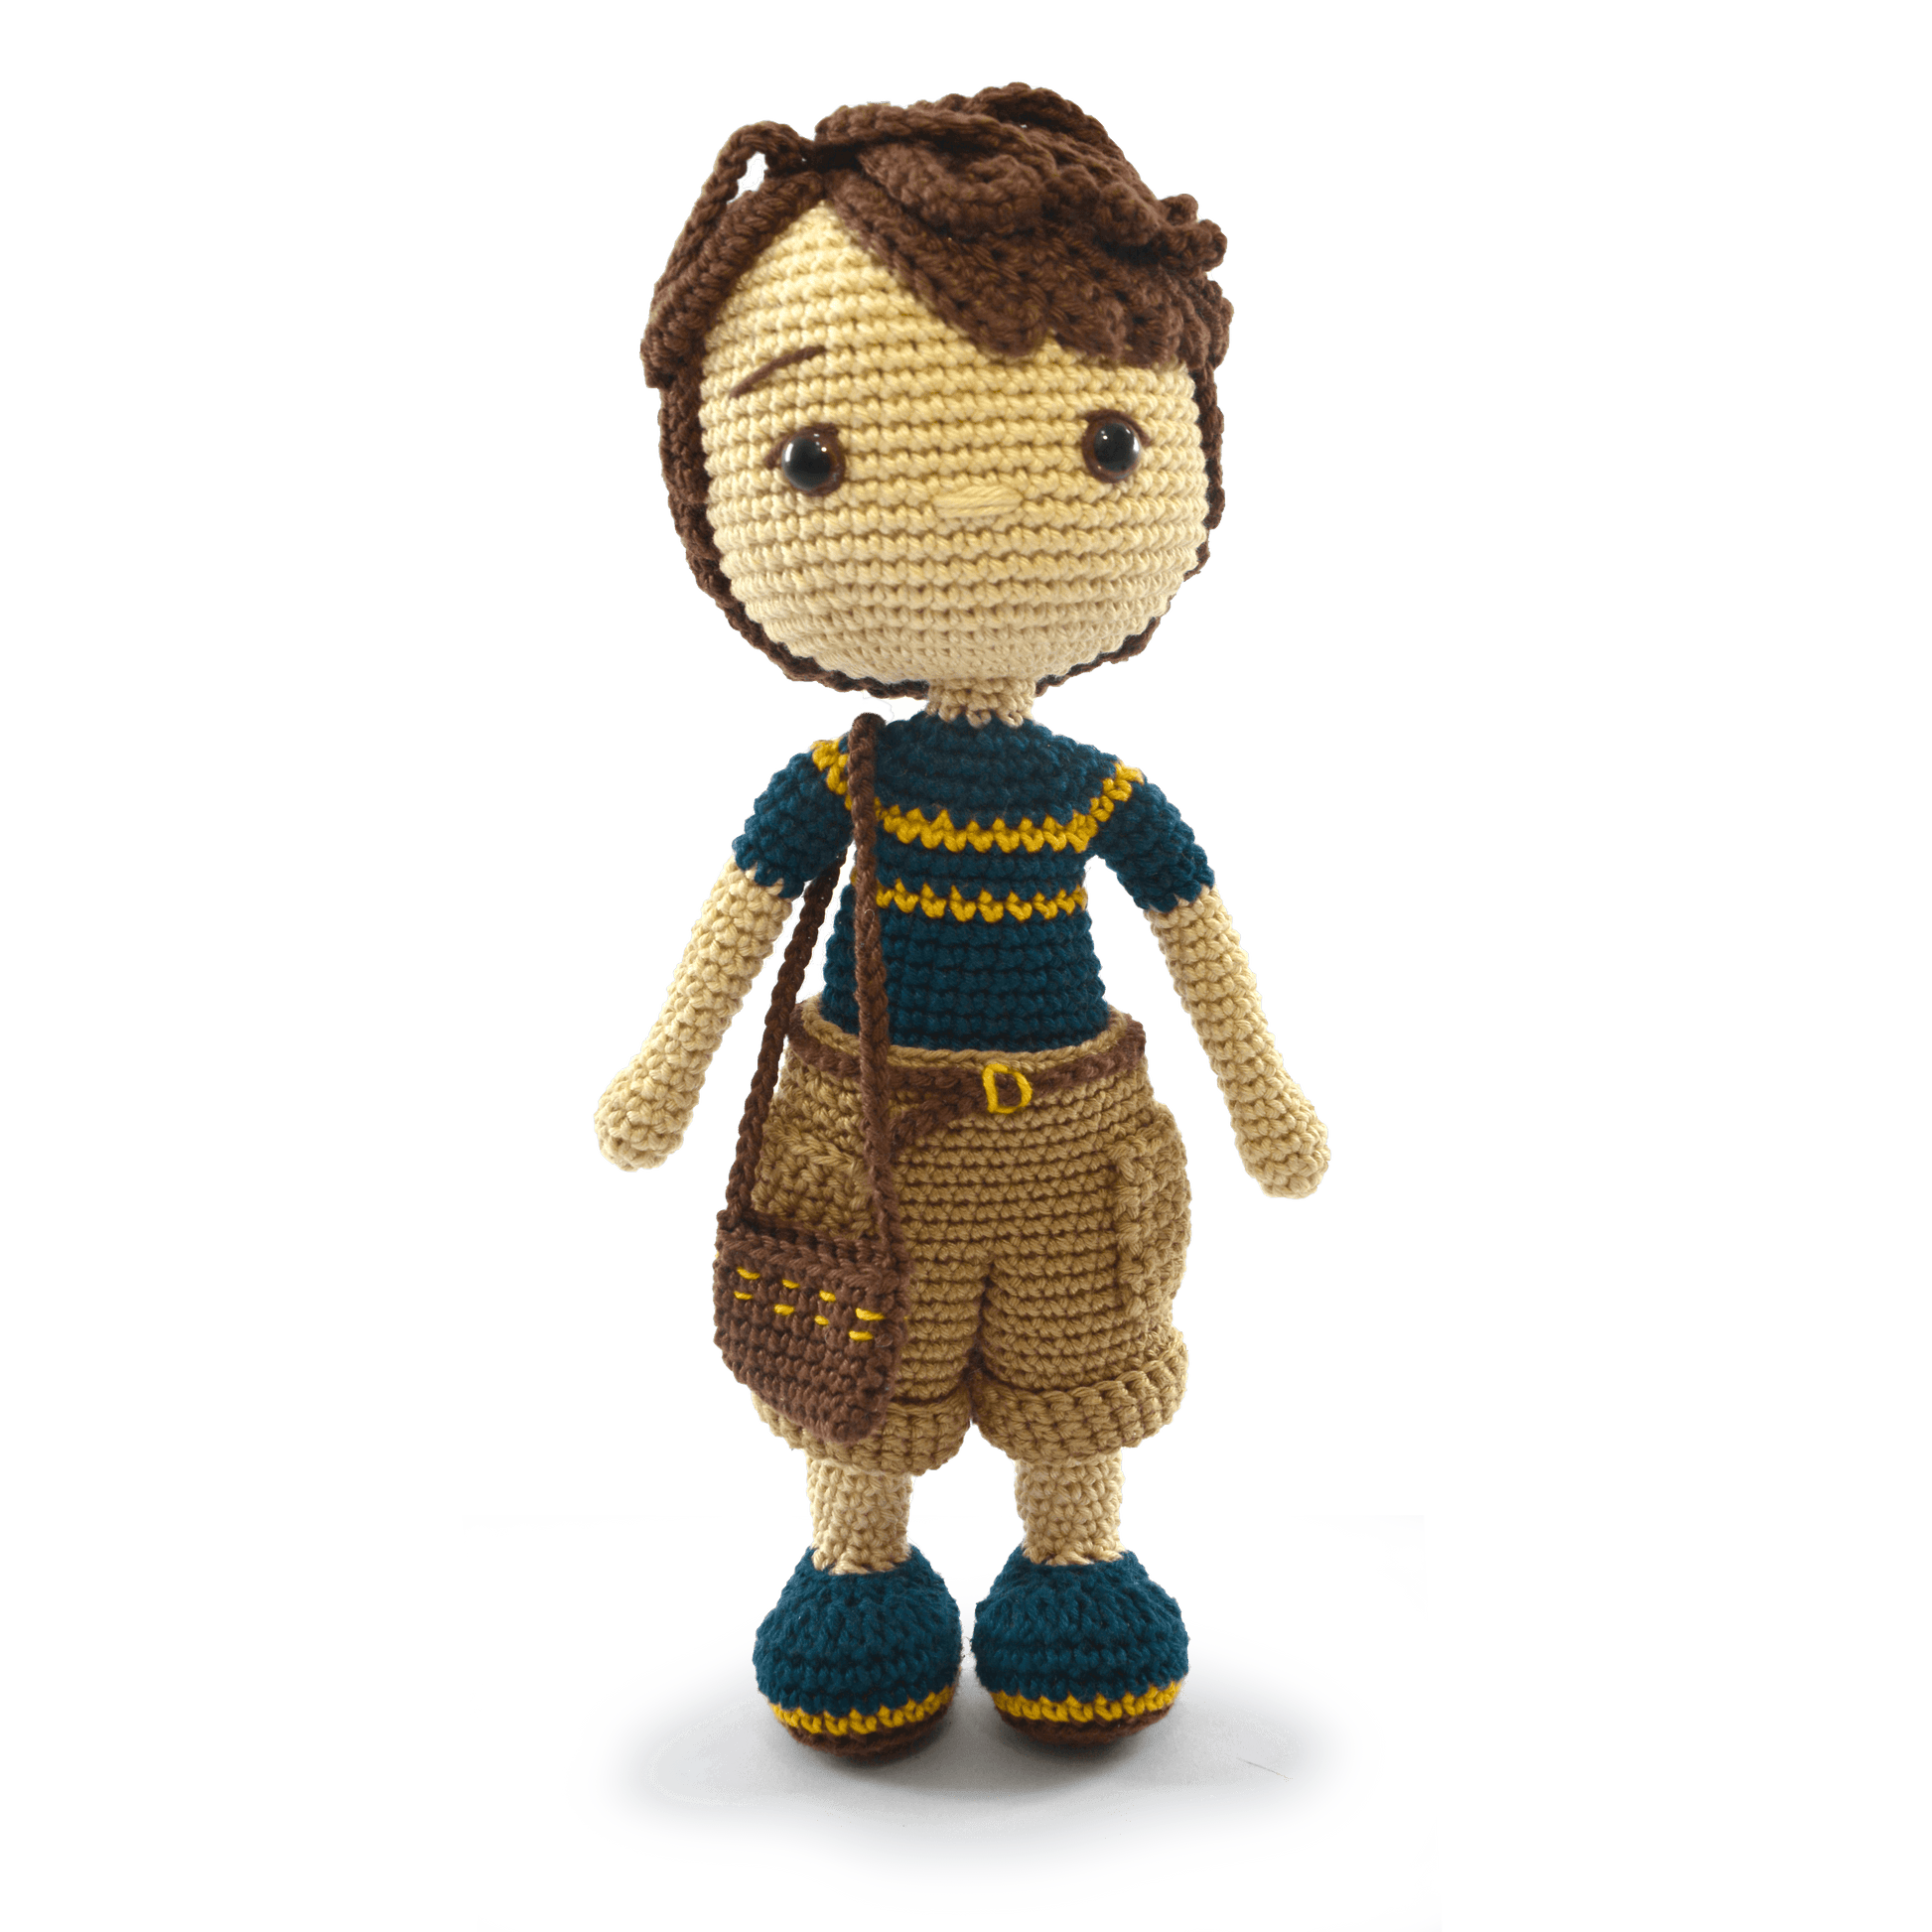 Circulo Amigurumi Doll Kits 02 Dan - Leo Hobby